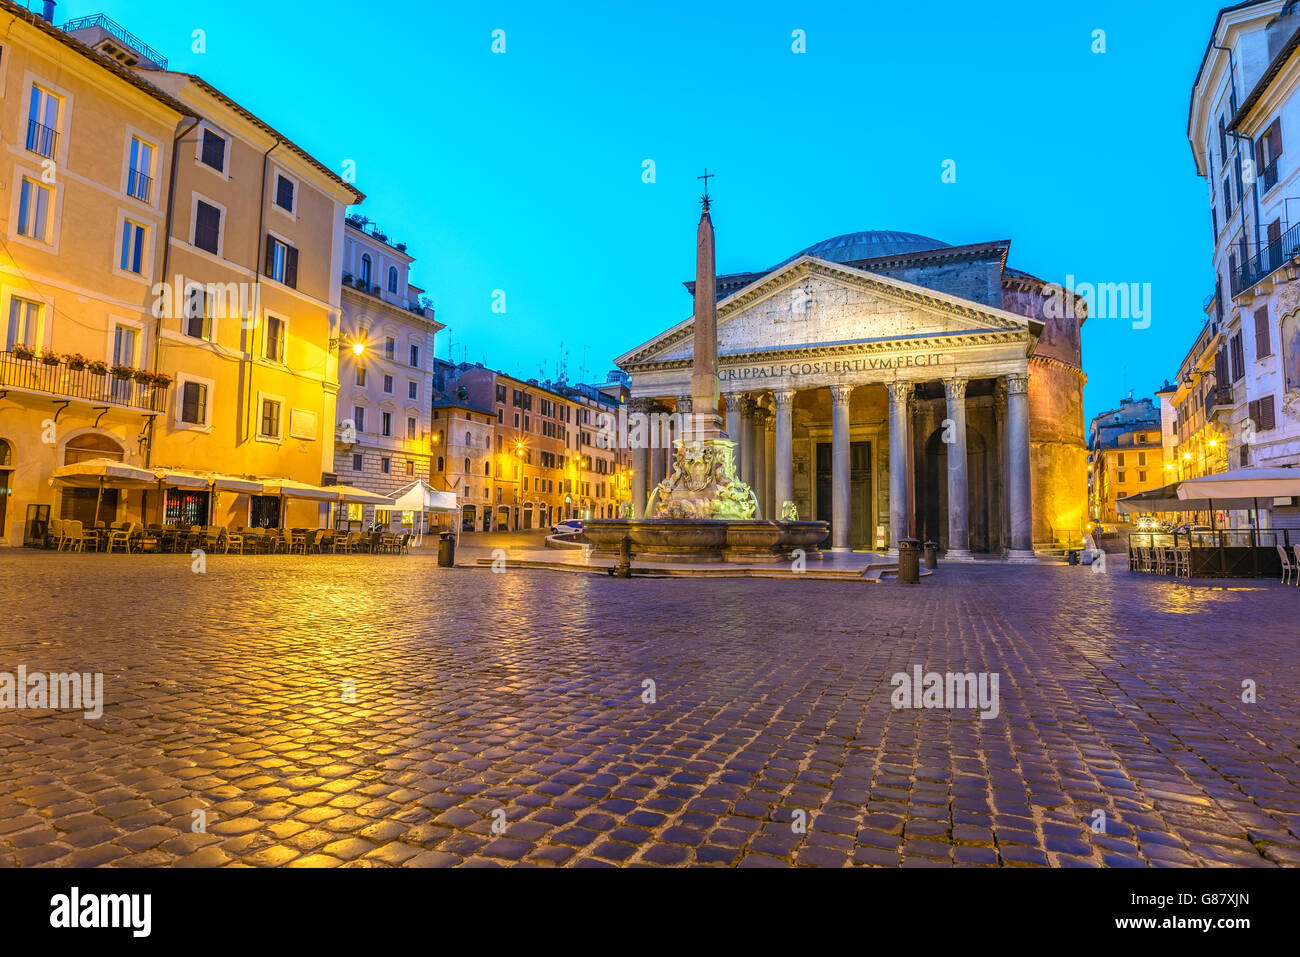 Pantheon, Rome, Italy Stock Photo